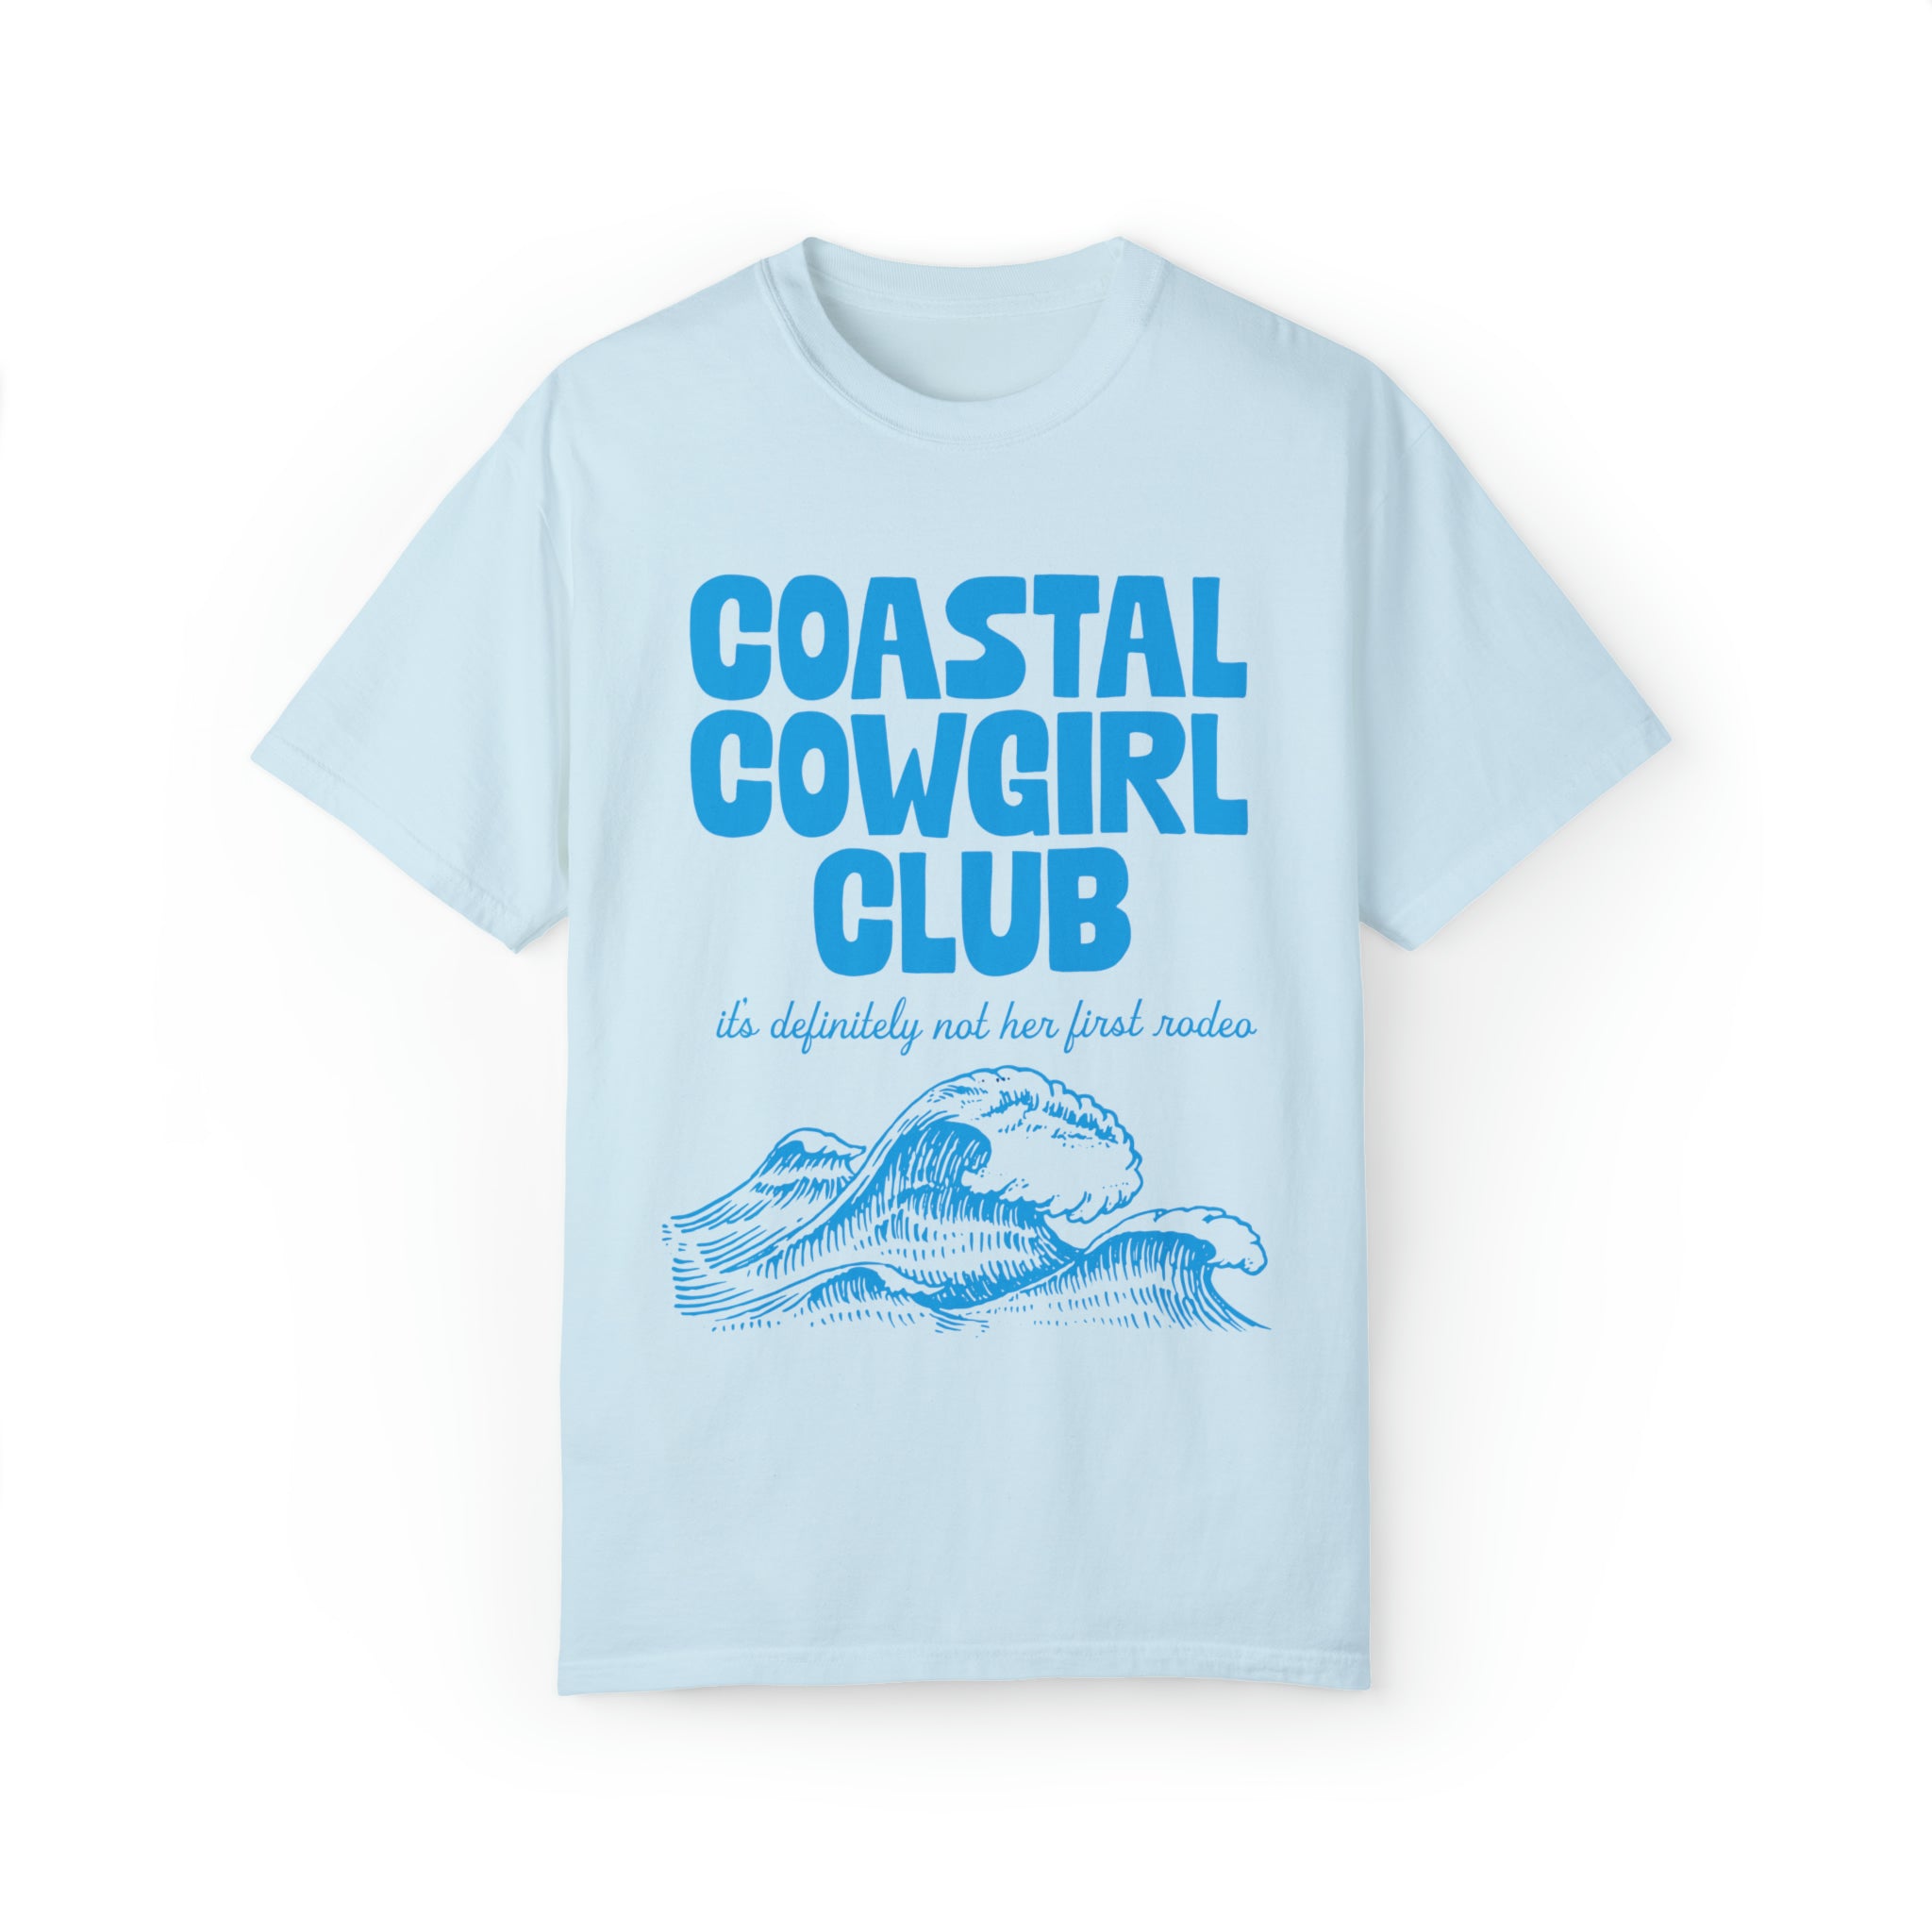 Coastal Cowgirl Club Comfort Colors Crewneck in dark blue